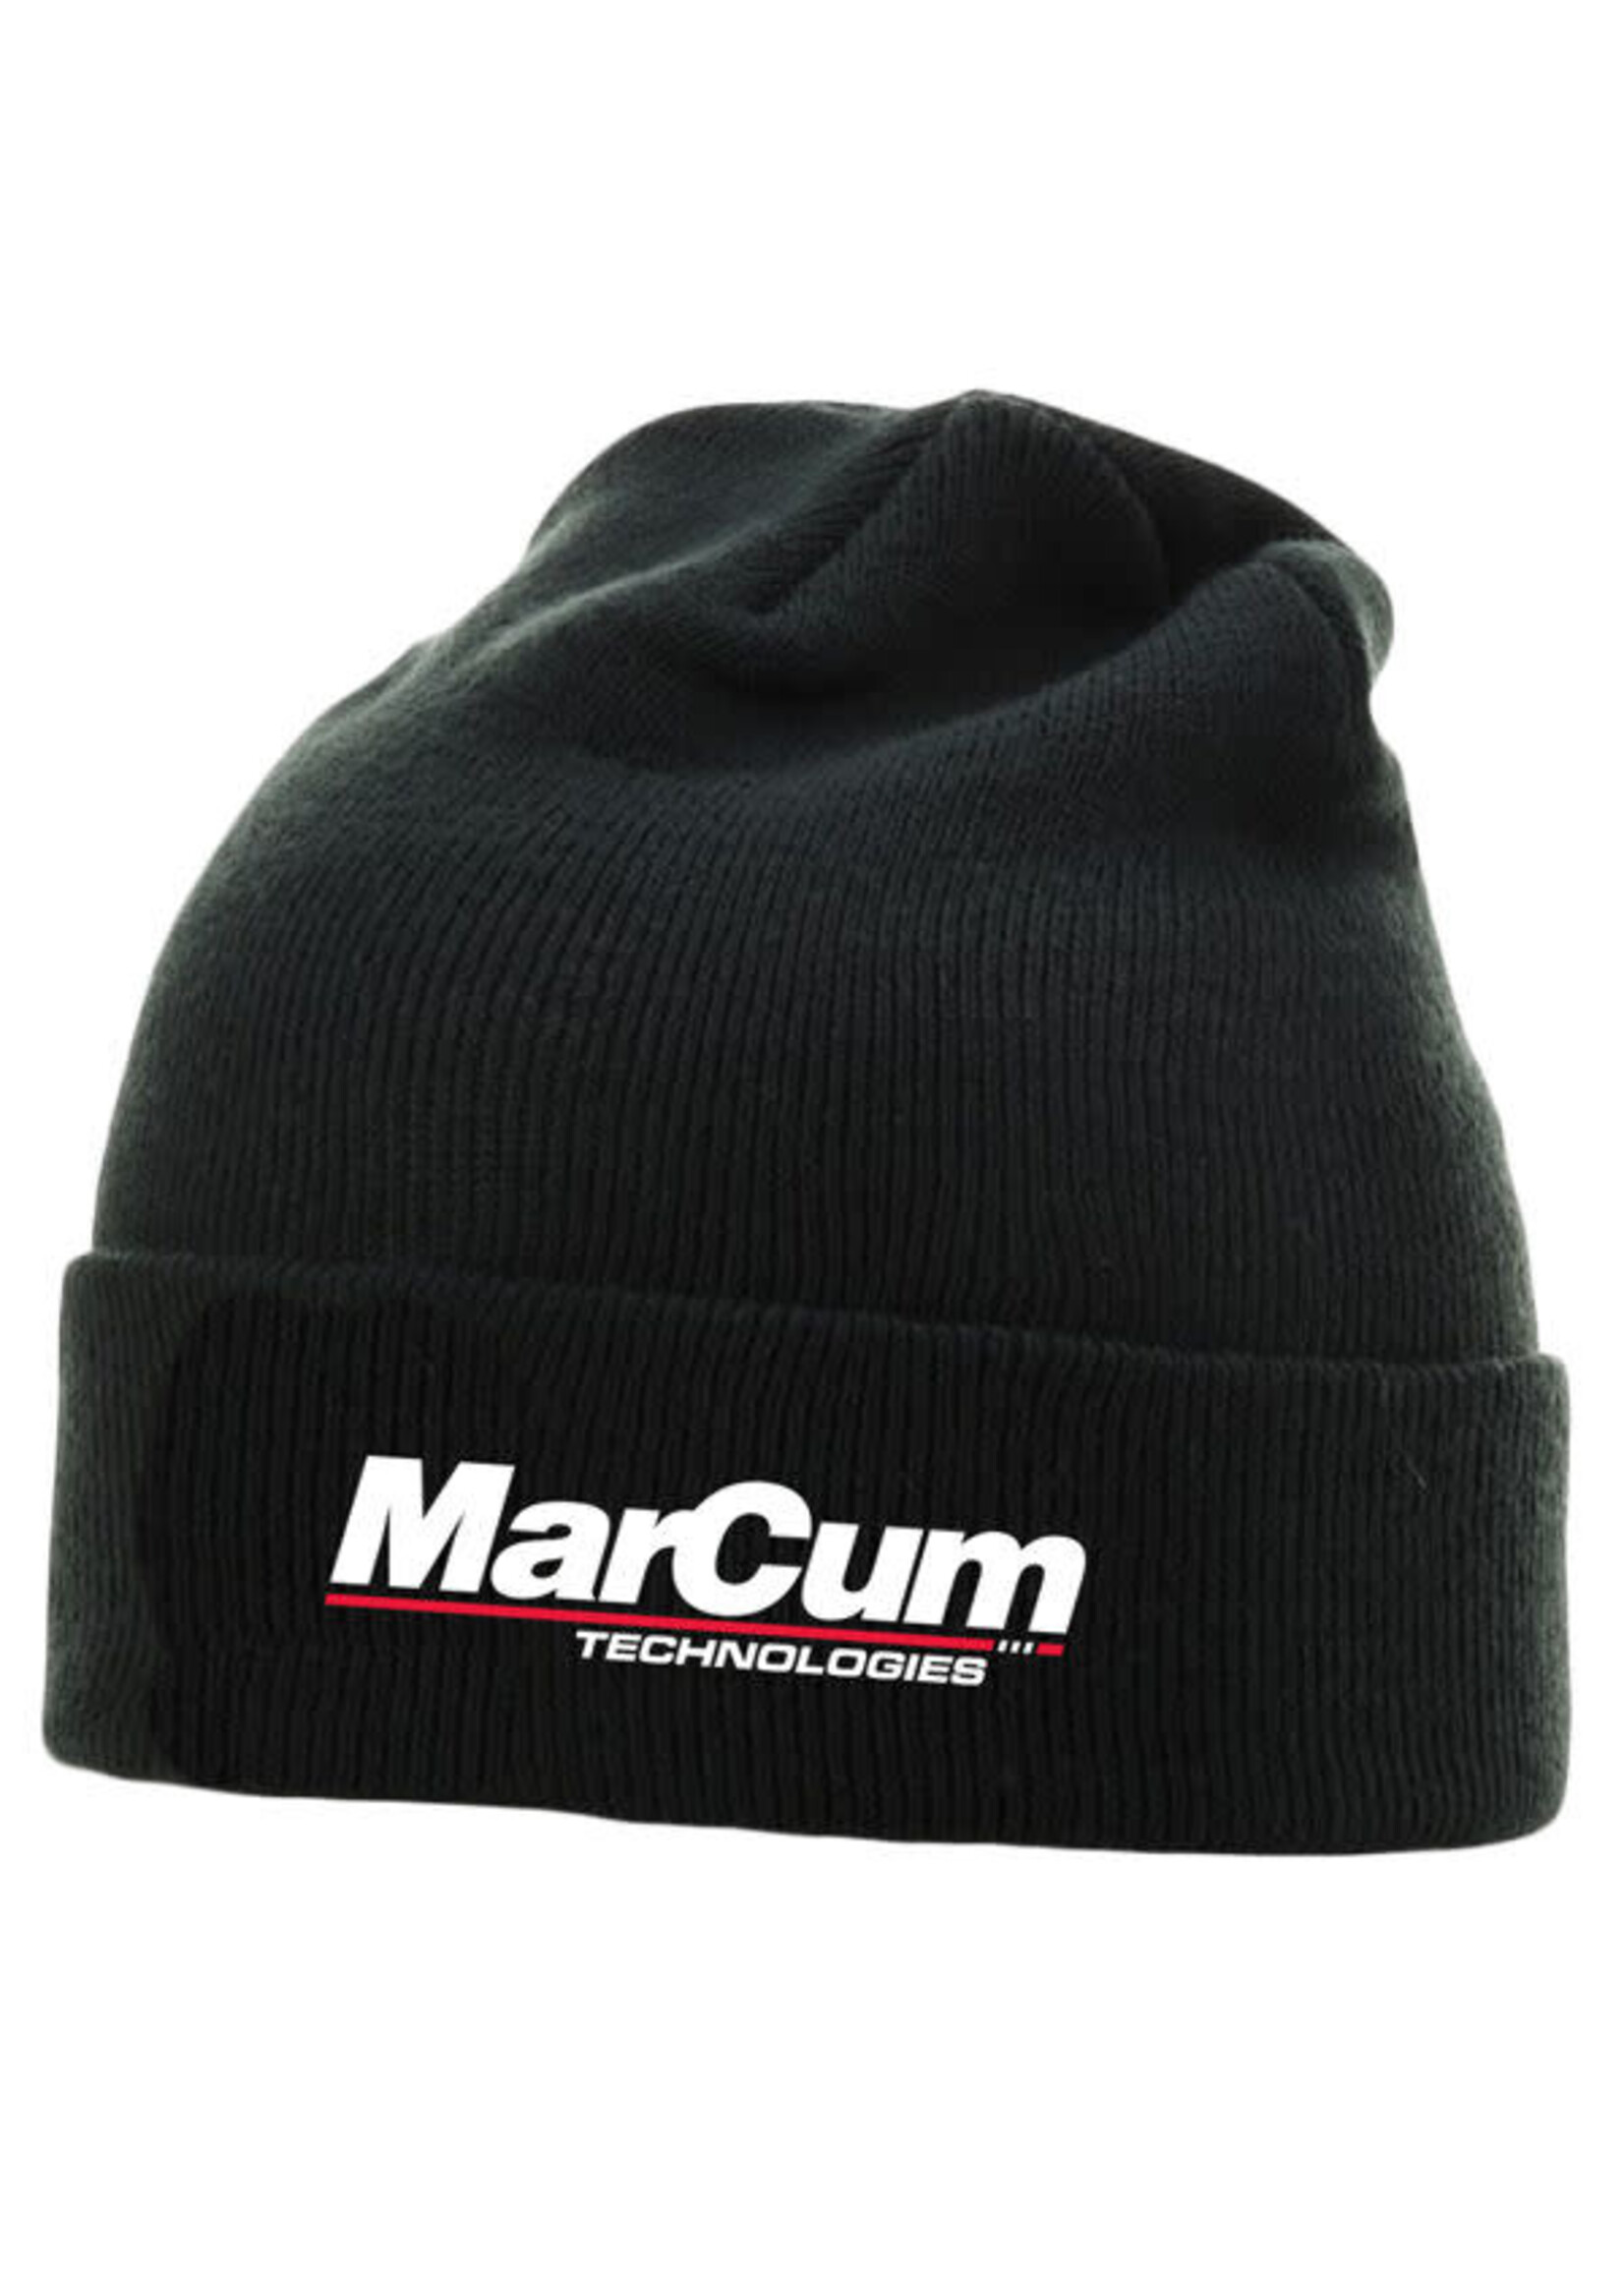 MarCum Technologies MarCum Black Beanie